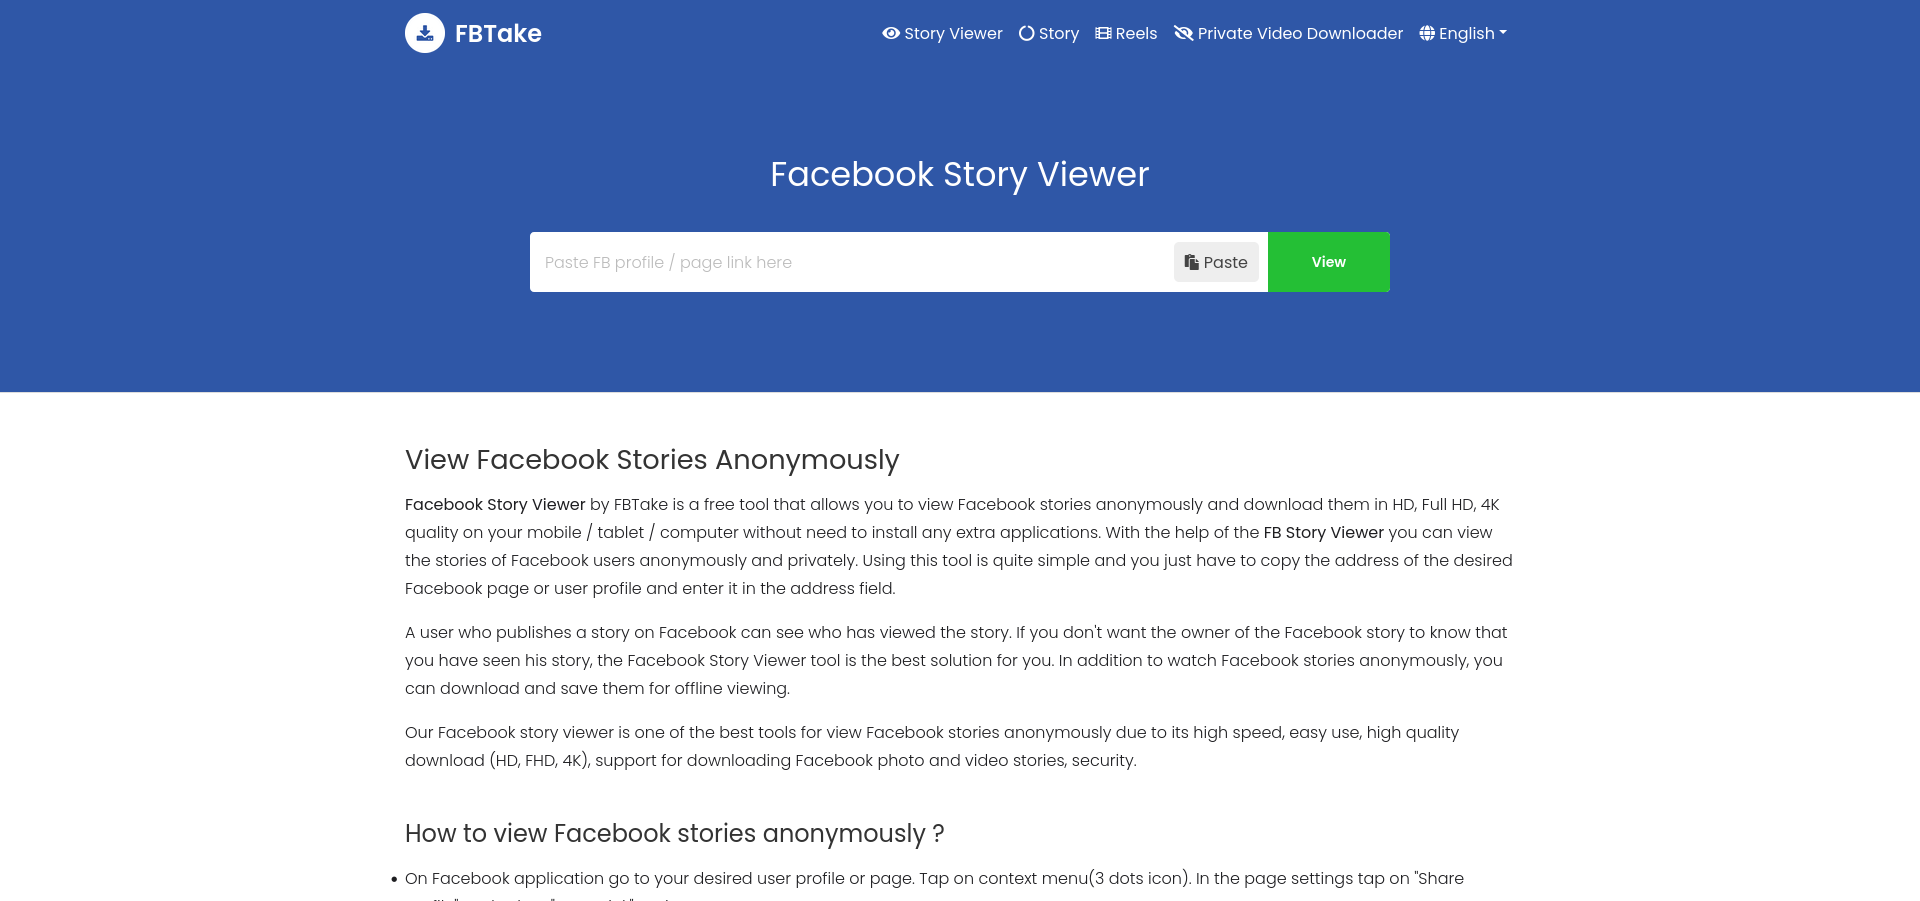 FBTake Facebook Story Viewer - FBTake